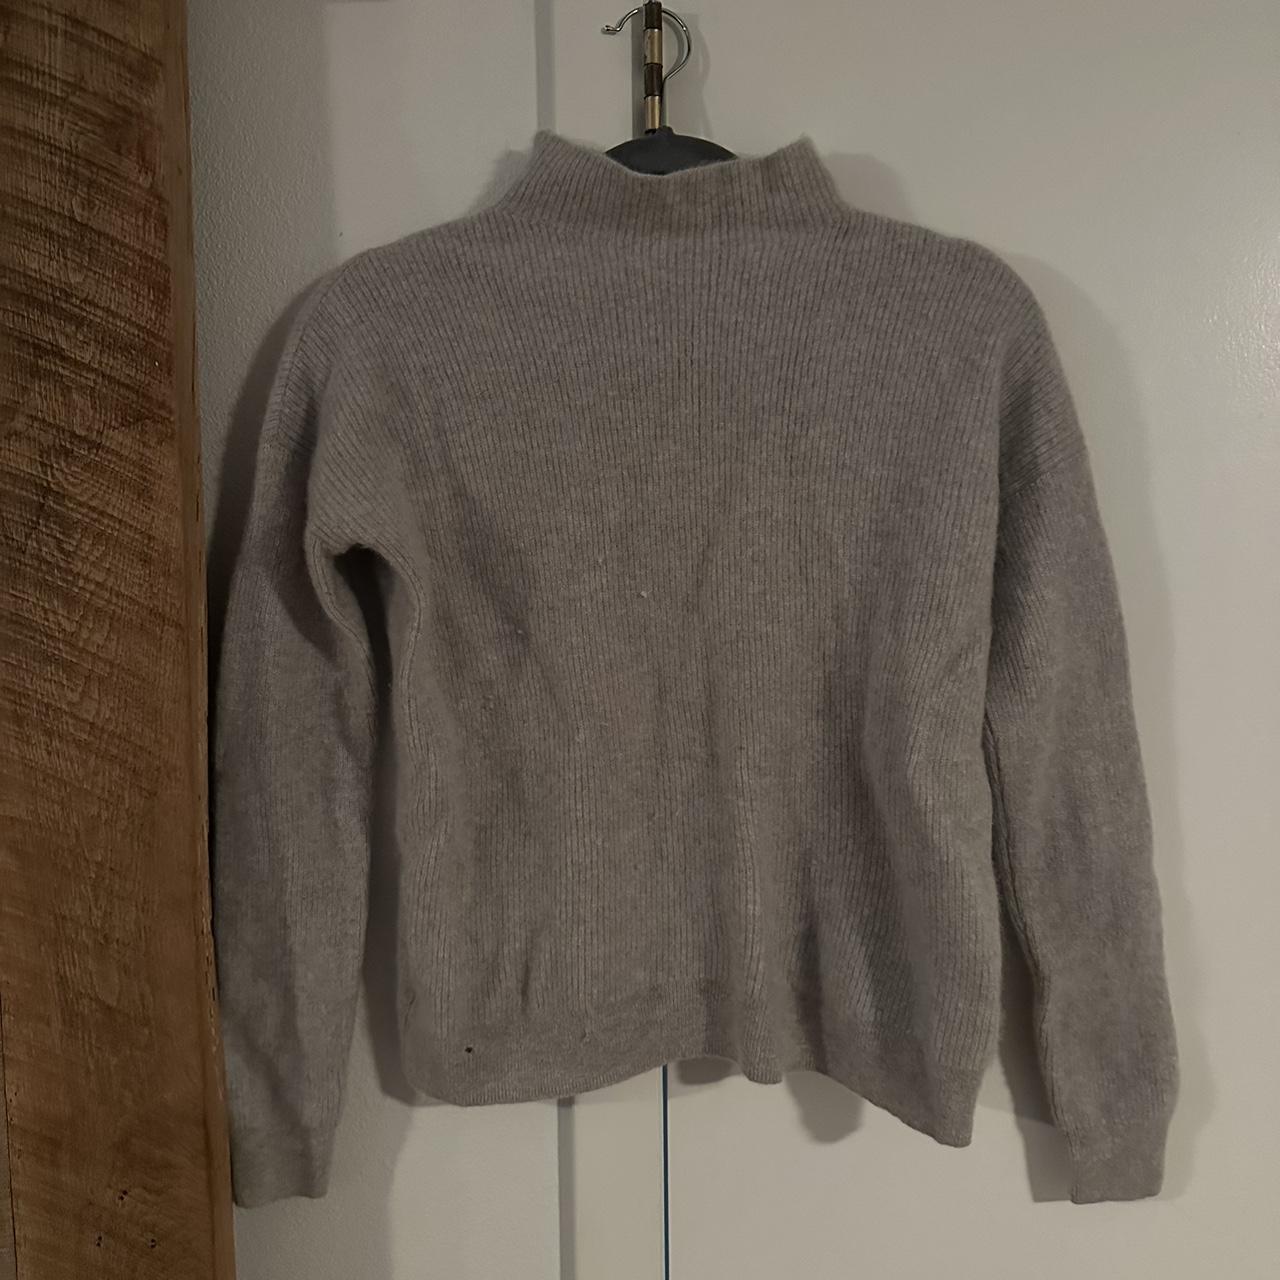 Light grey Saks Fifth Avenue cashmere sweater with... - Depop